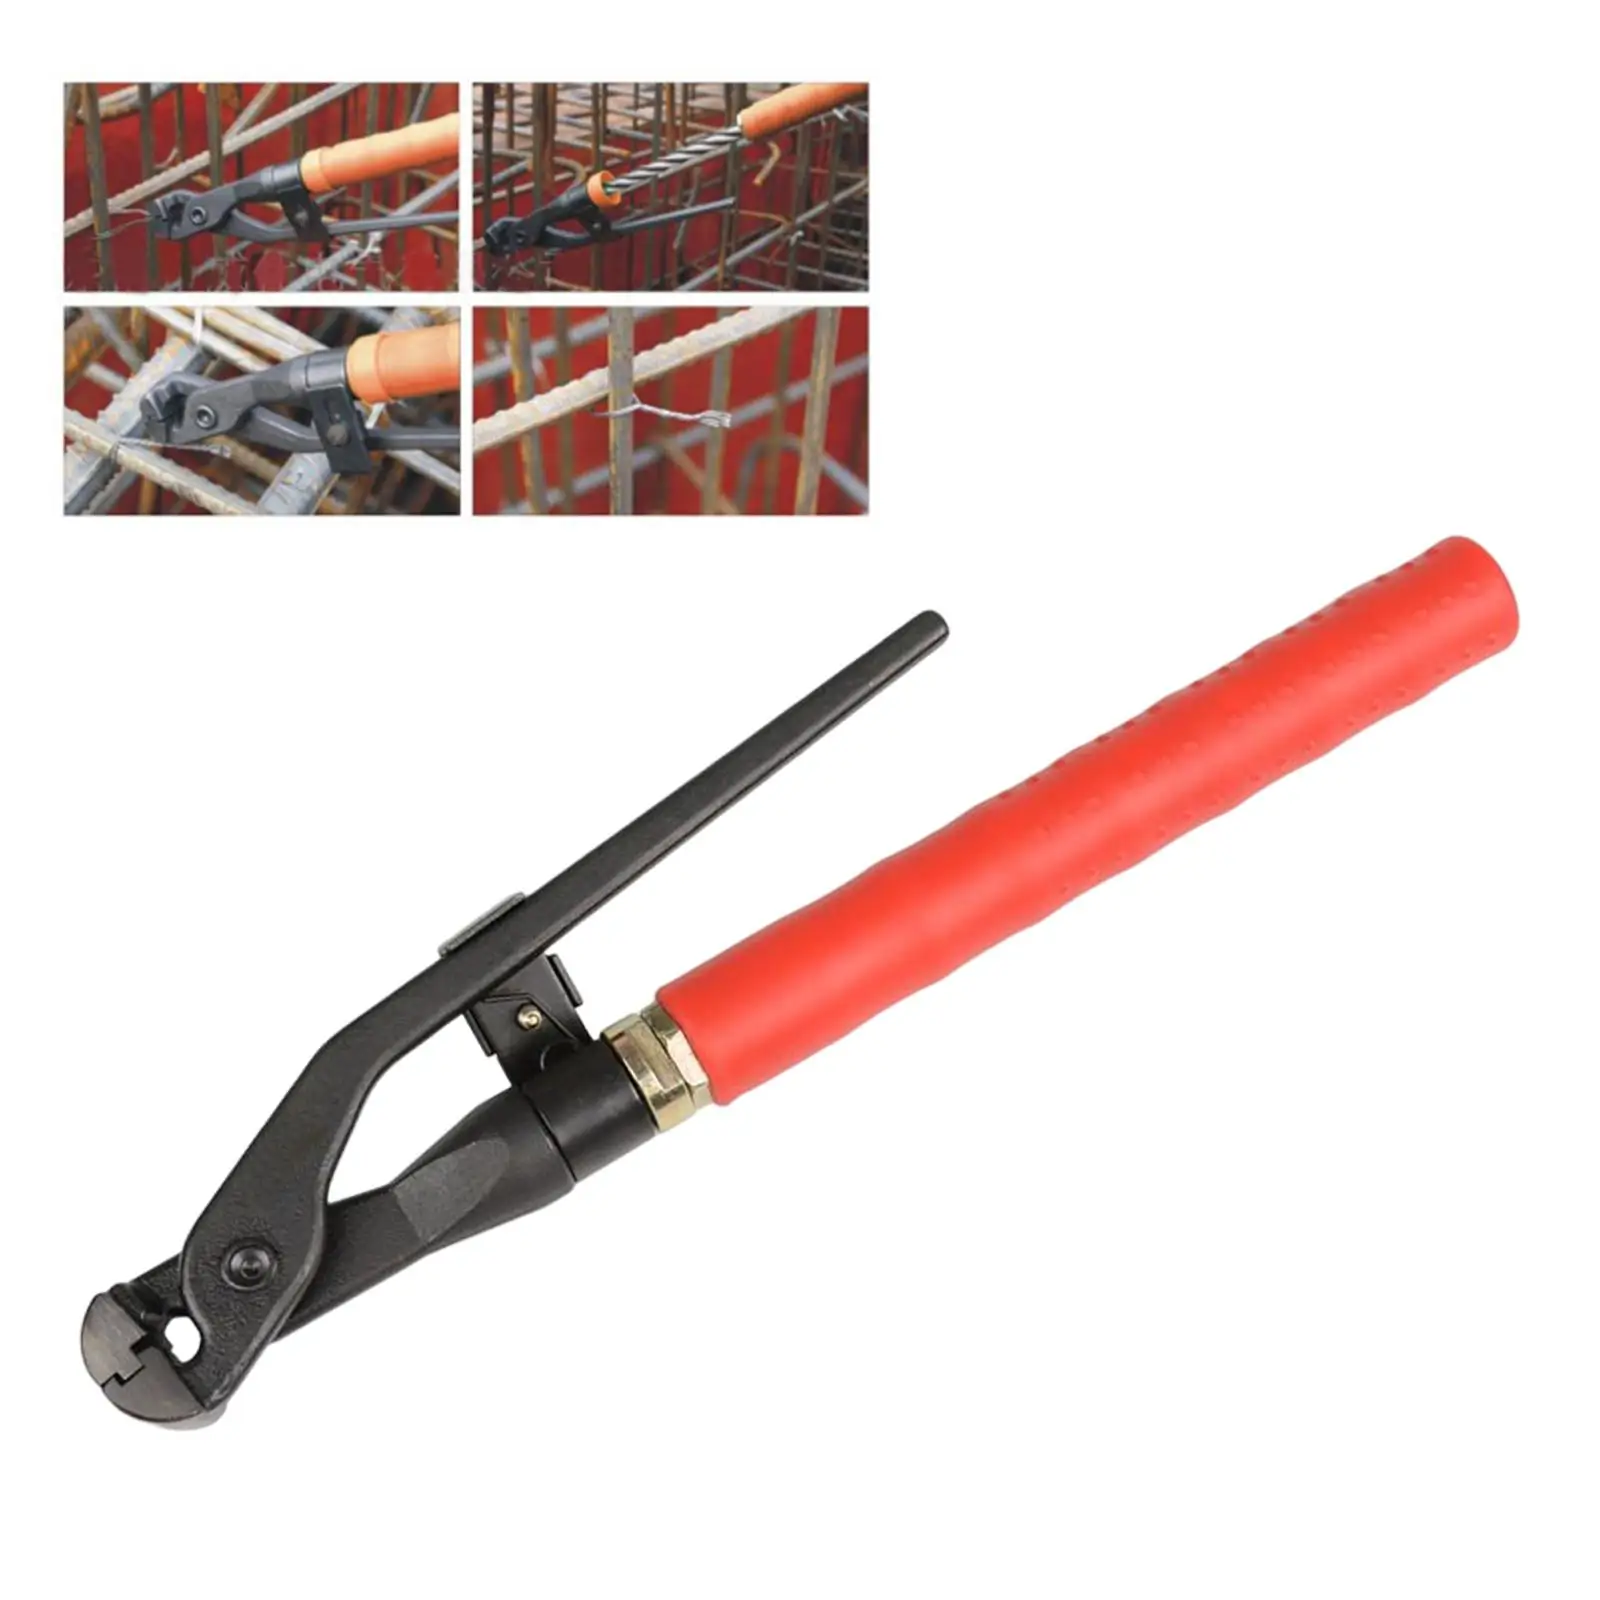 Multifunction Rebar Pliers Manual Cutter Linemans Tying tool Pliers Tendon Binding Machine Pliers Cut